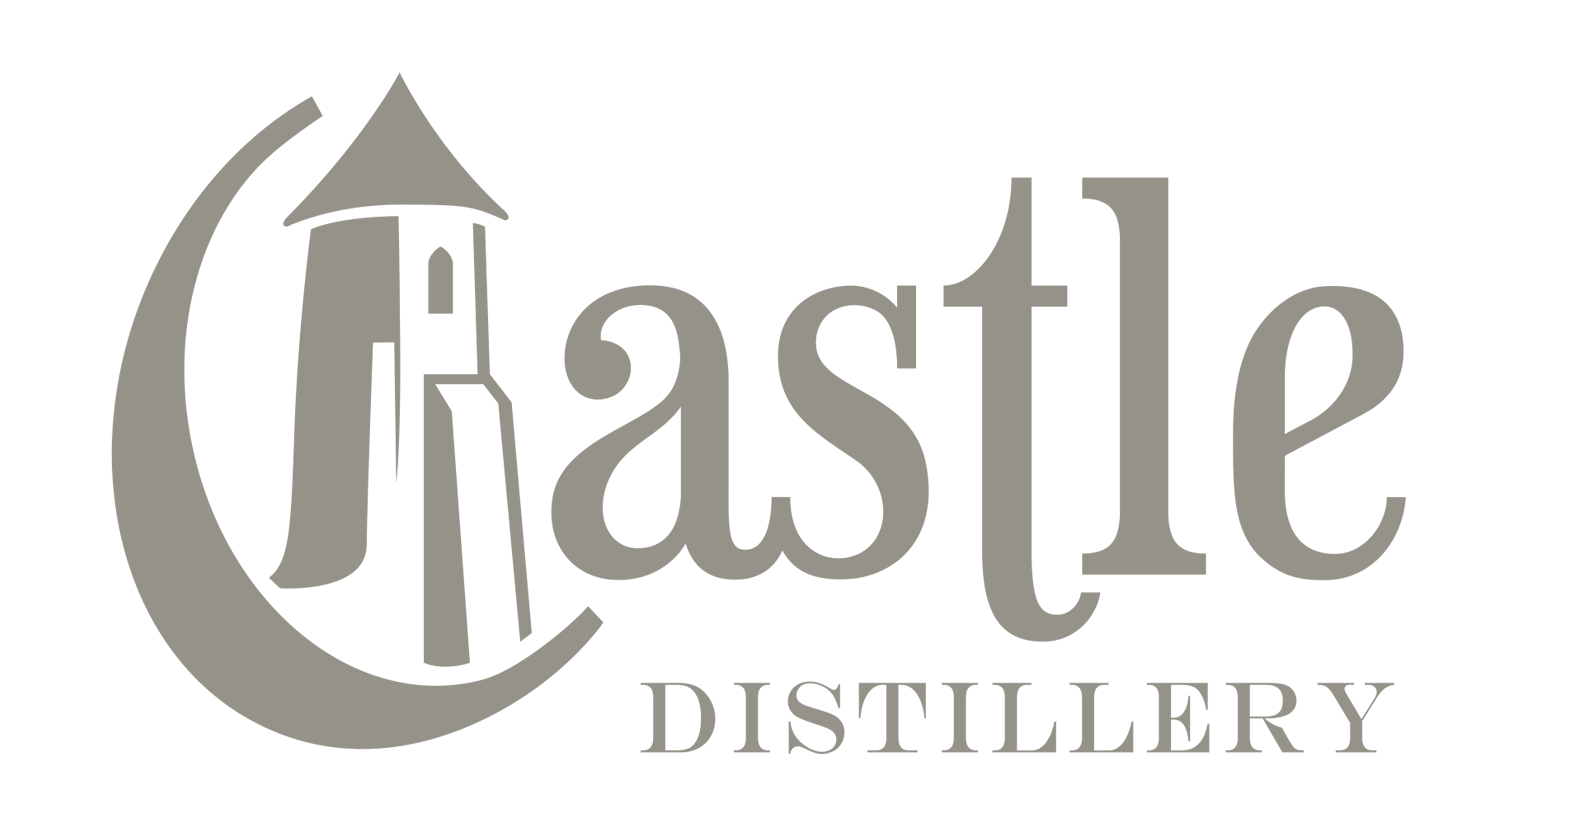 Castle Distillery